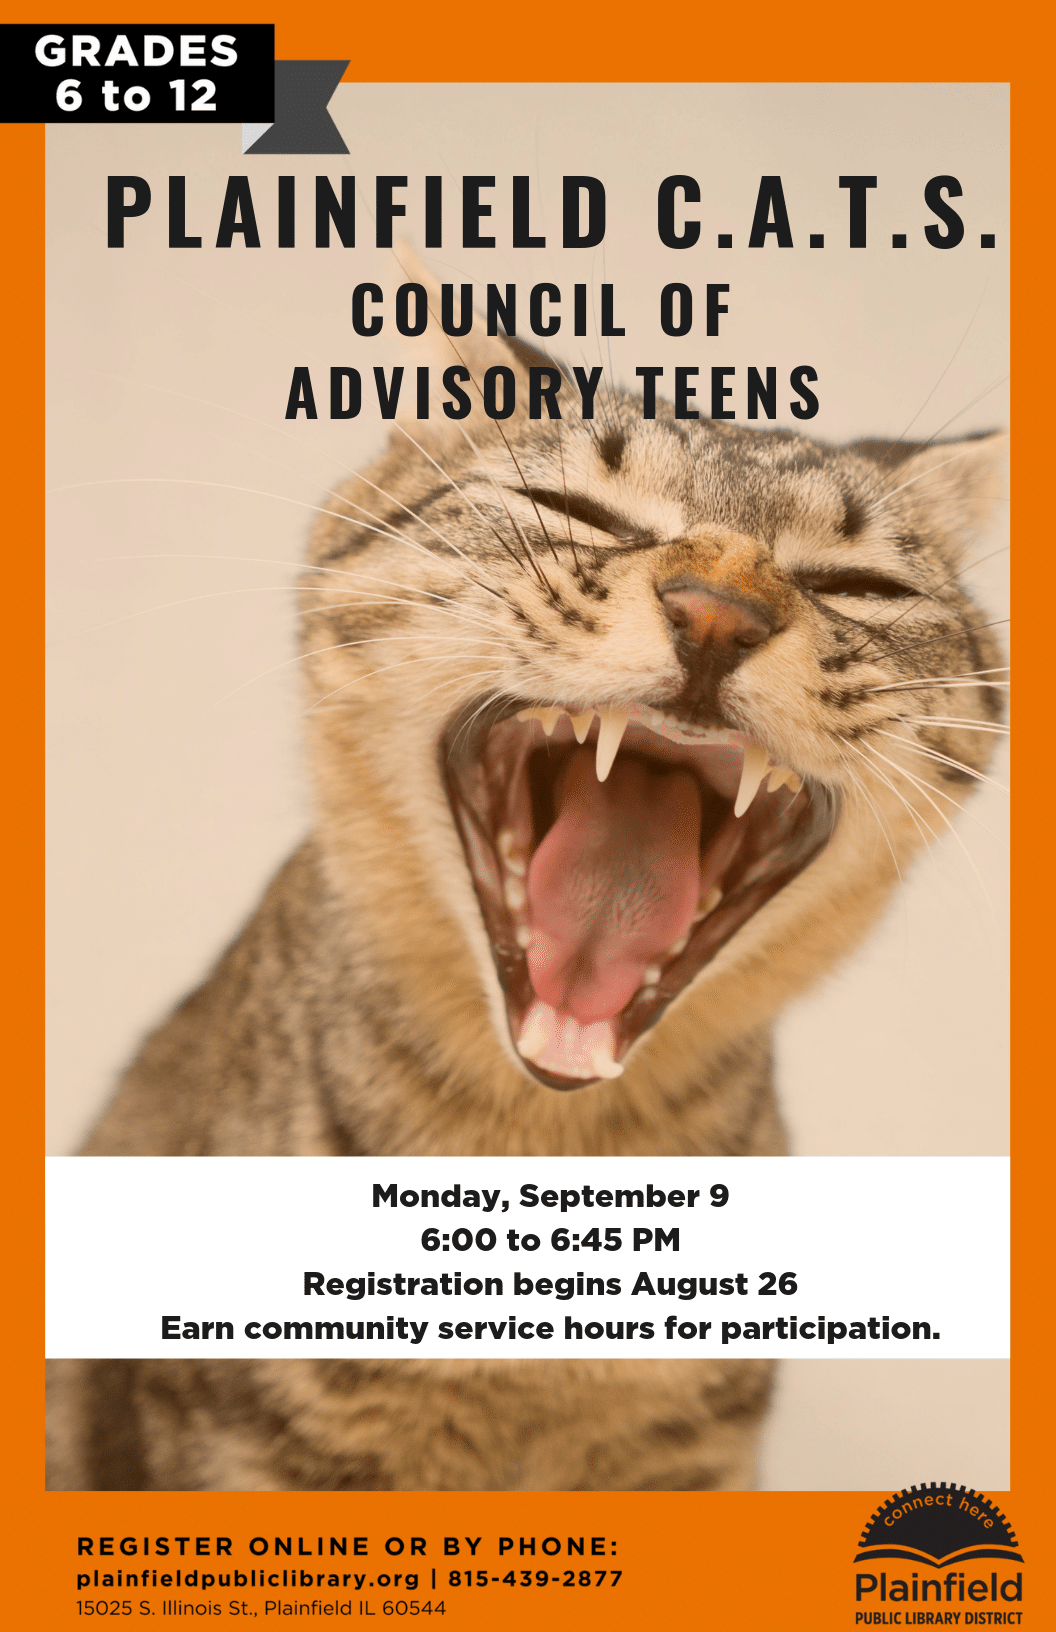 Council of Advisory Teens